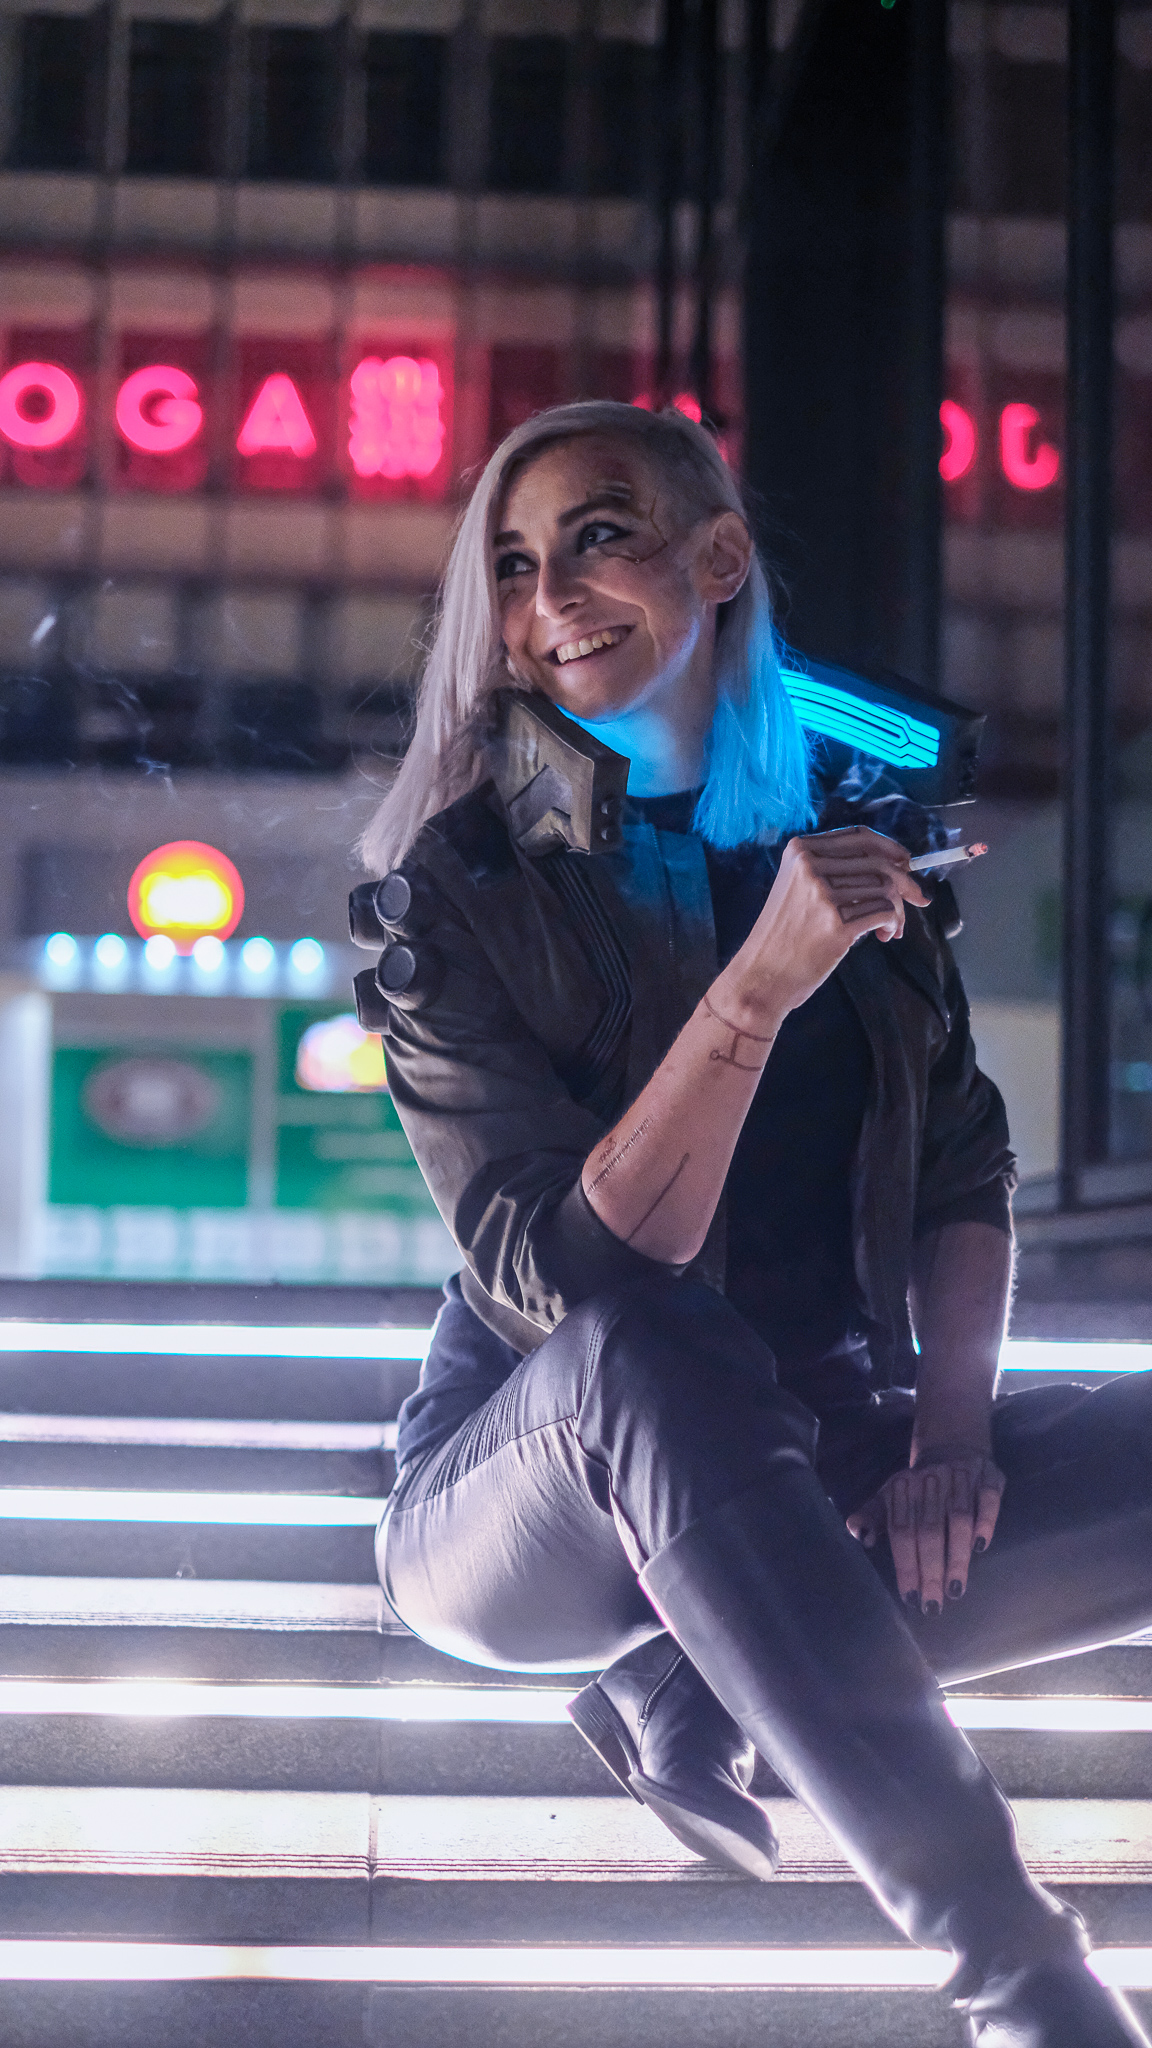 Cyberpunk 2077 - V Cosplay - Cyberpunk 2077 - V Cosplay - Alzbeta Trojanova smiling and looking over her shoulder